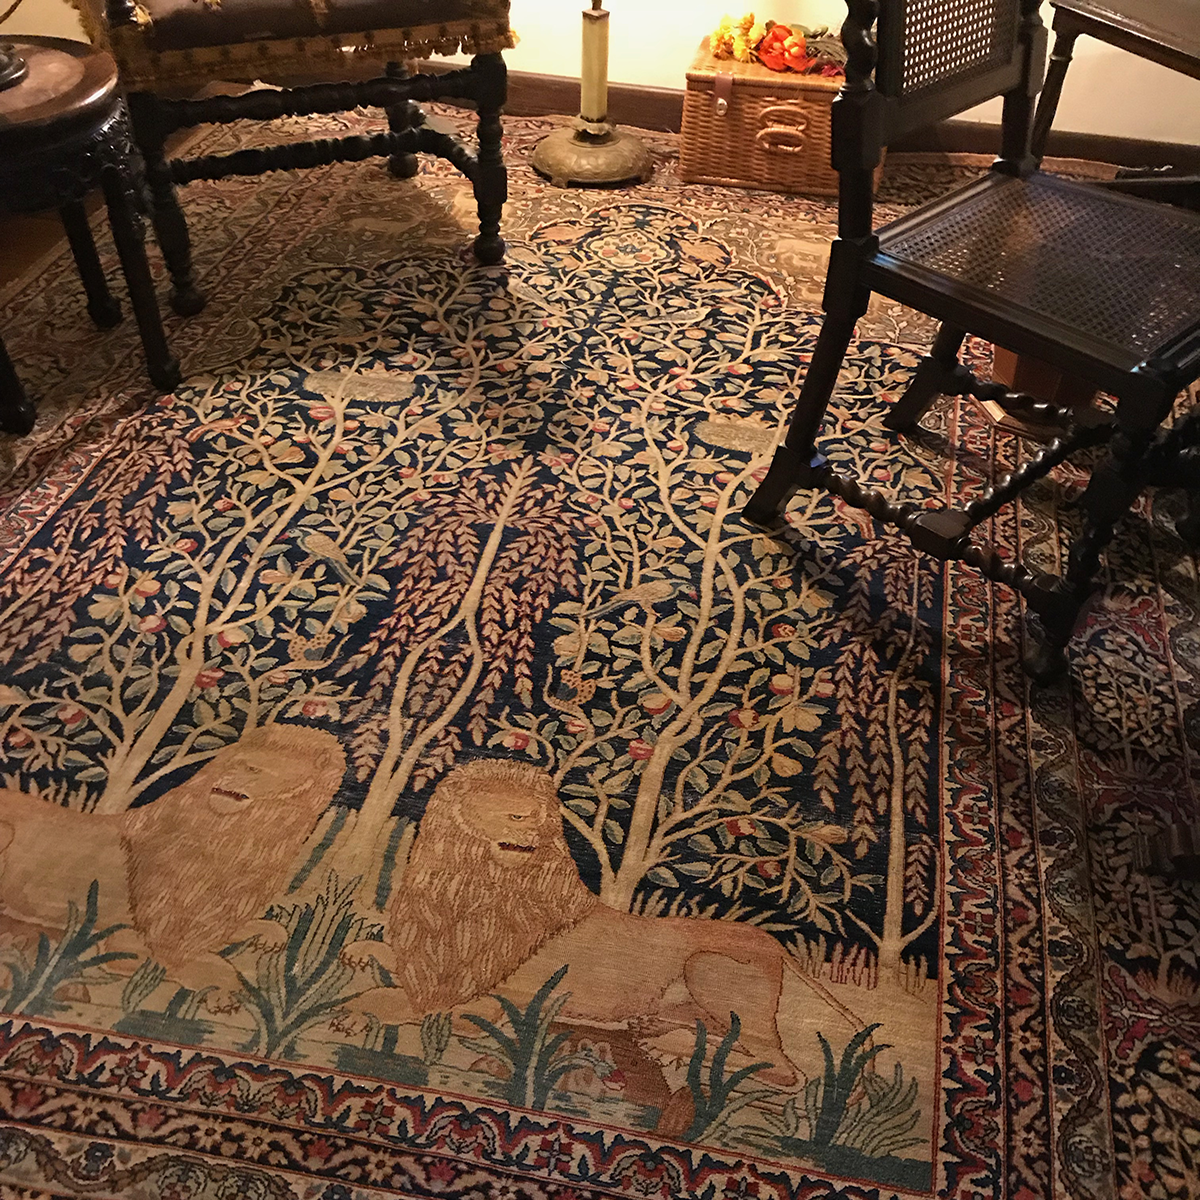 antique rug copy.png